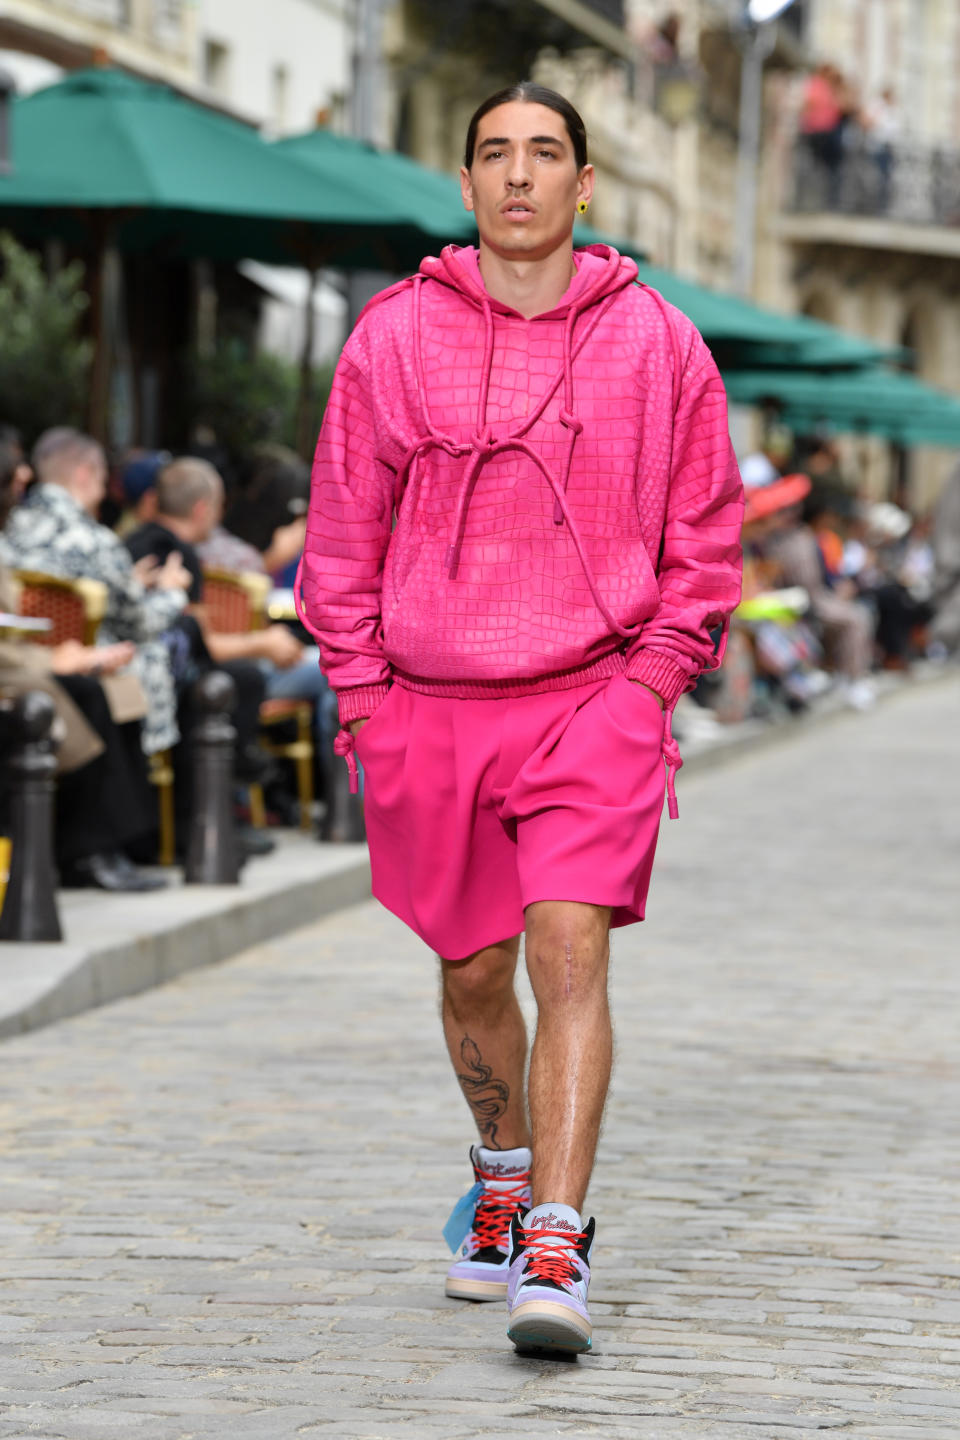 Con este look en color rosado Héctor Bellerín deslumbró en pasarelas (Foto: Pascal Le Segretain/Getty Images)